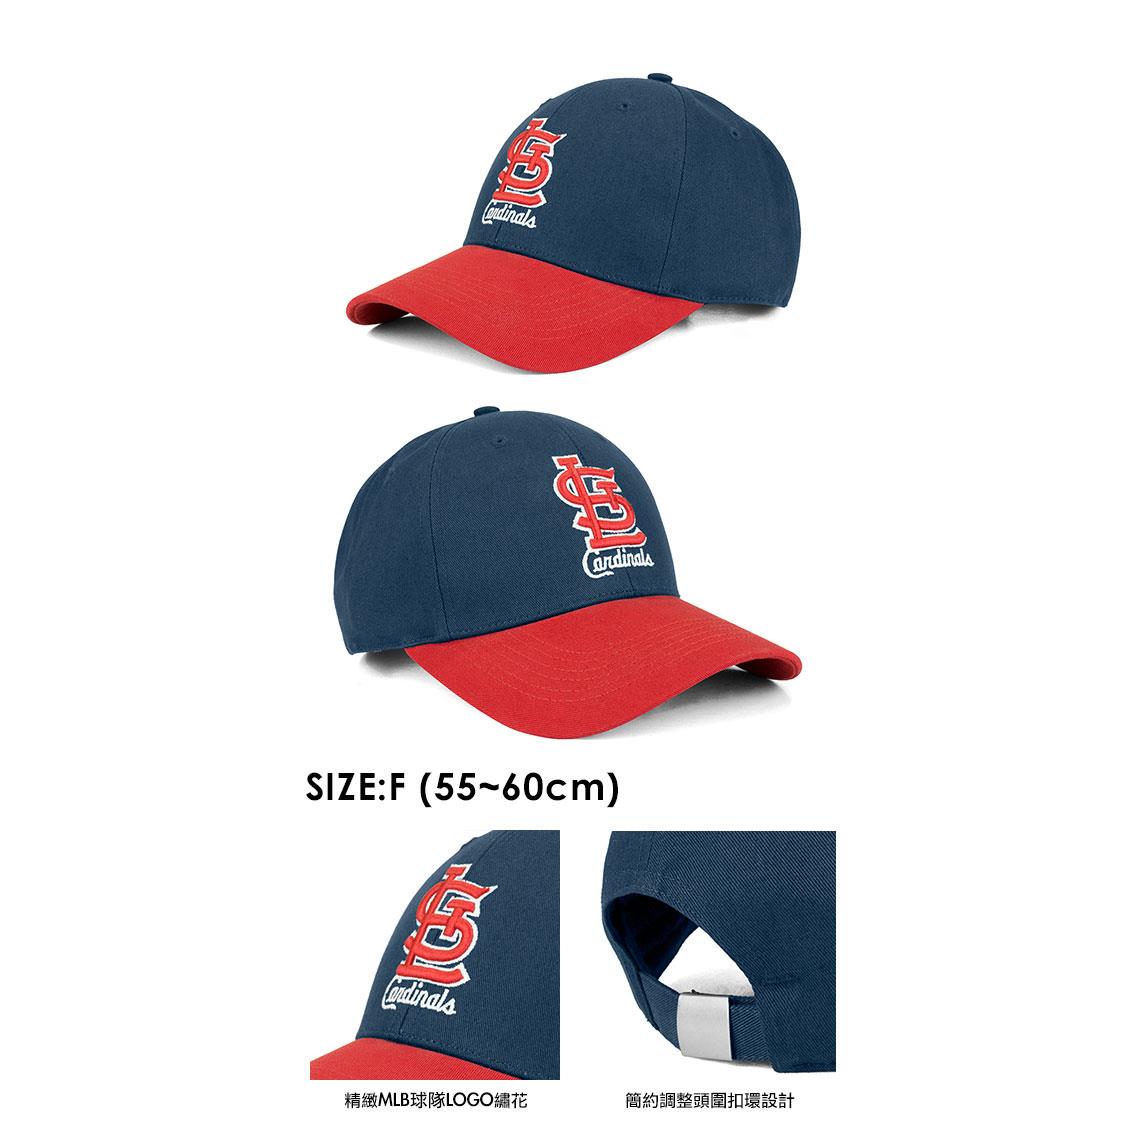 #MLB/NBA 5732005-580  中性 帽子-紅雀隊 深藍色/紅帽延/紅logo